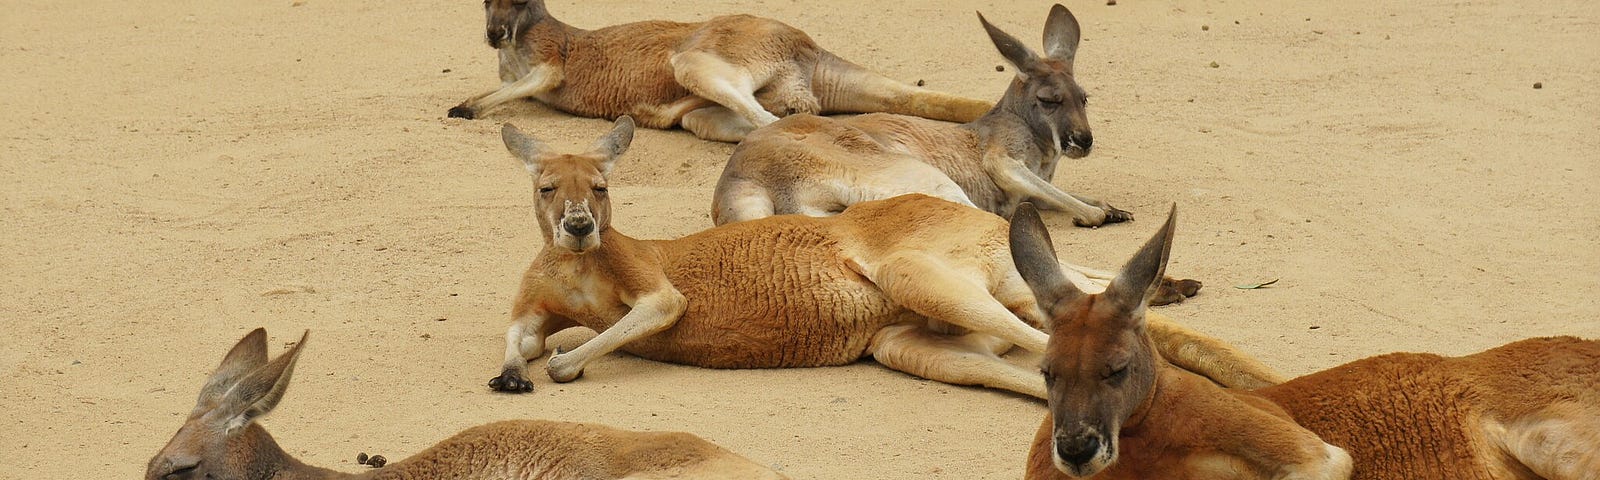 Five Kangaroos lazing on the beach